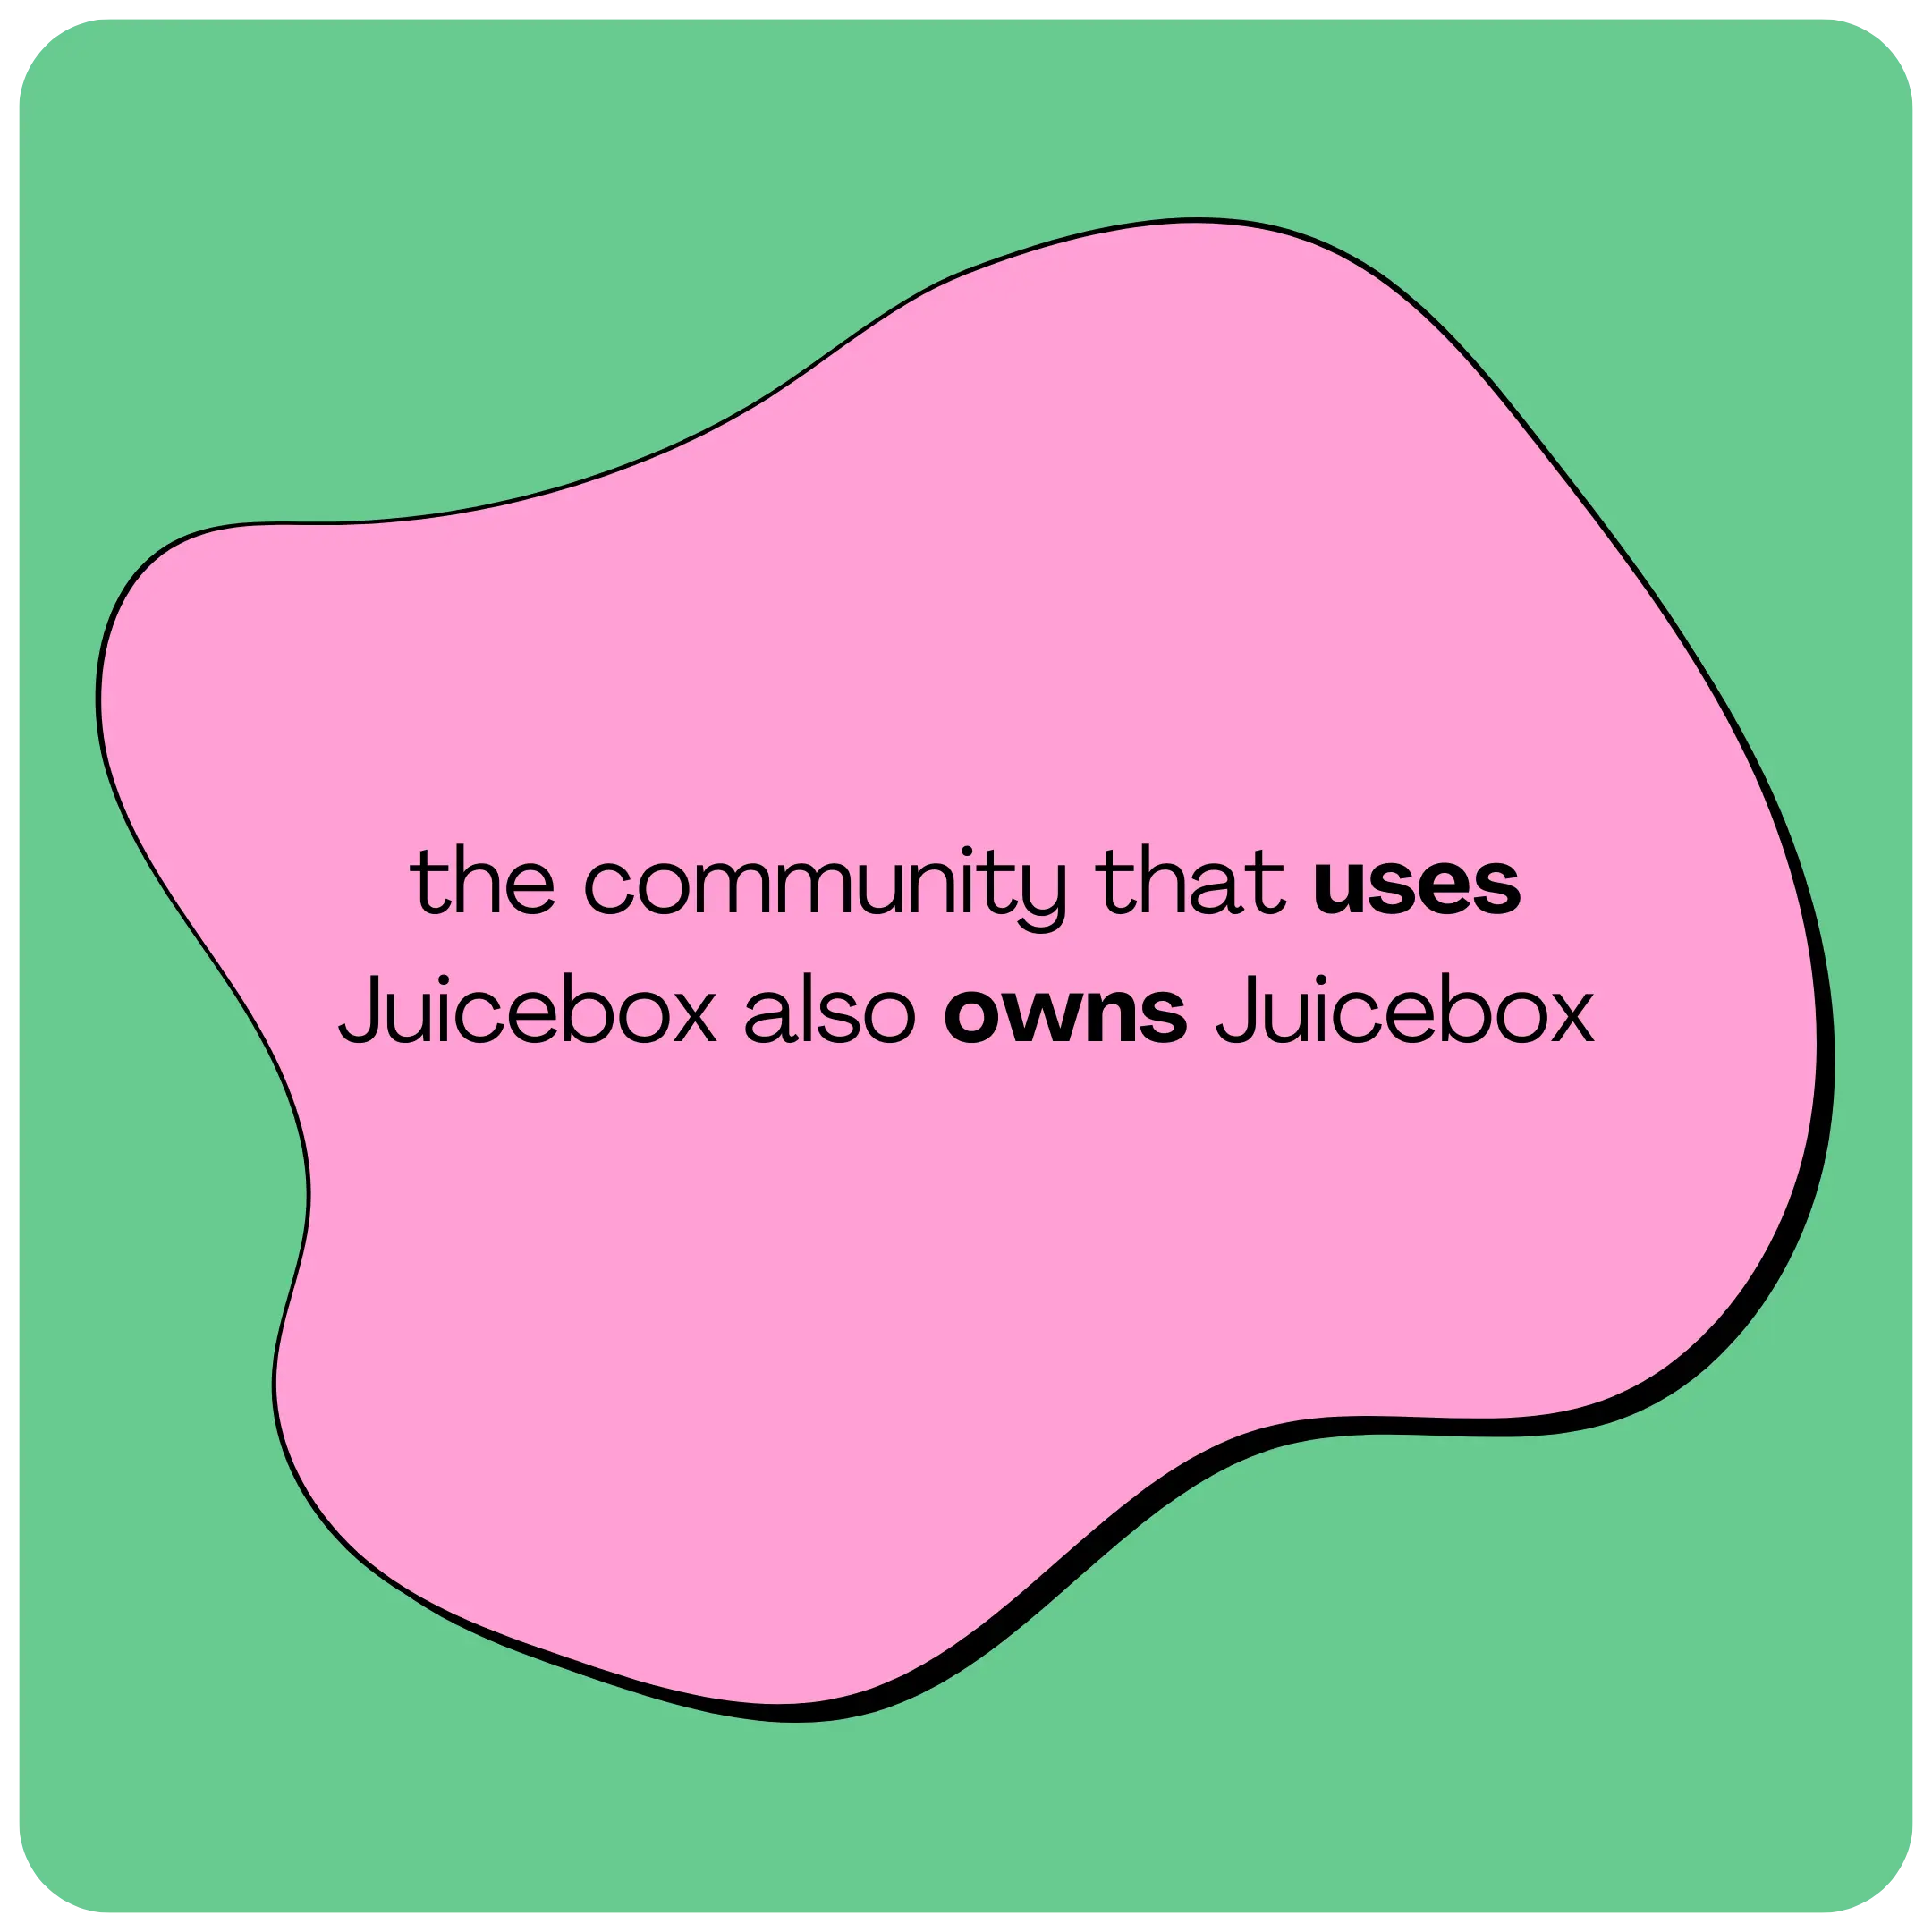 Juicebox is community owned